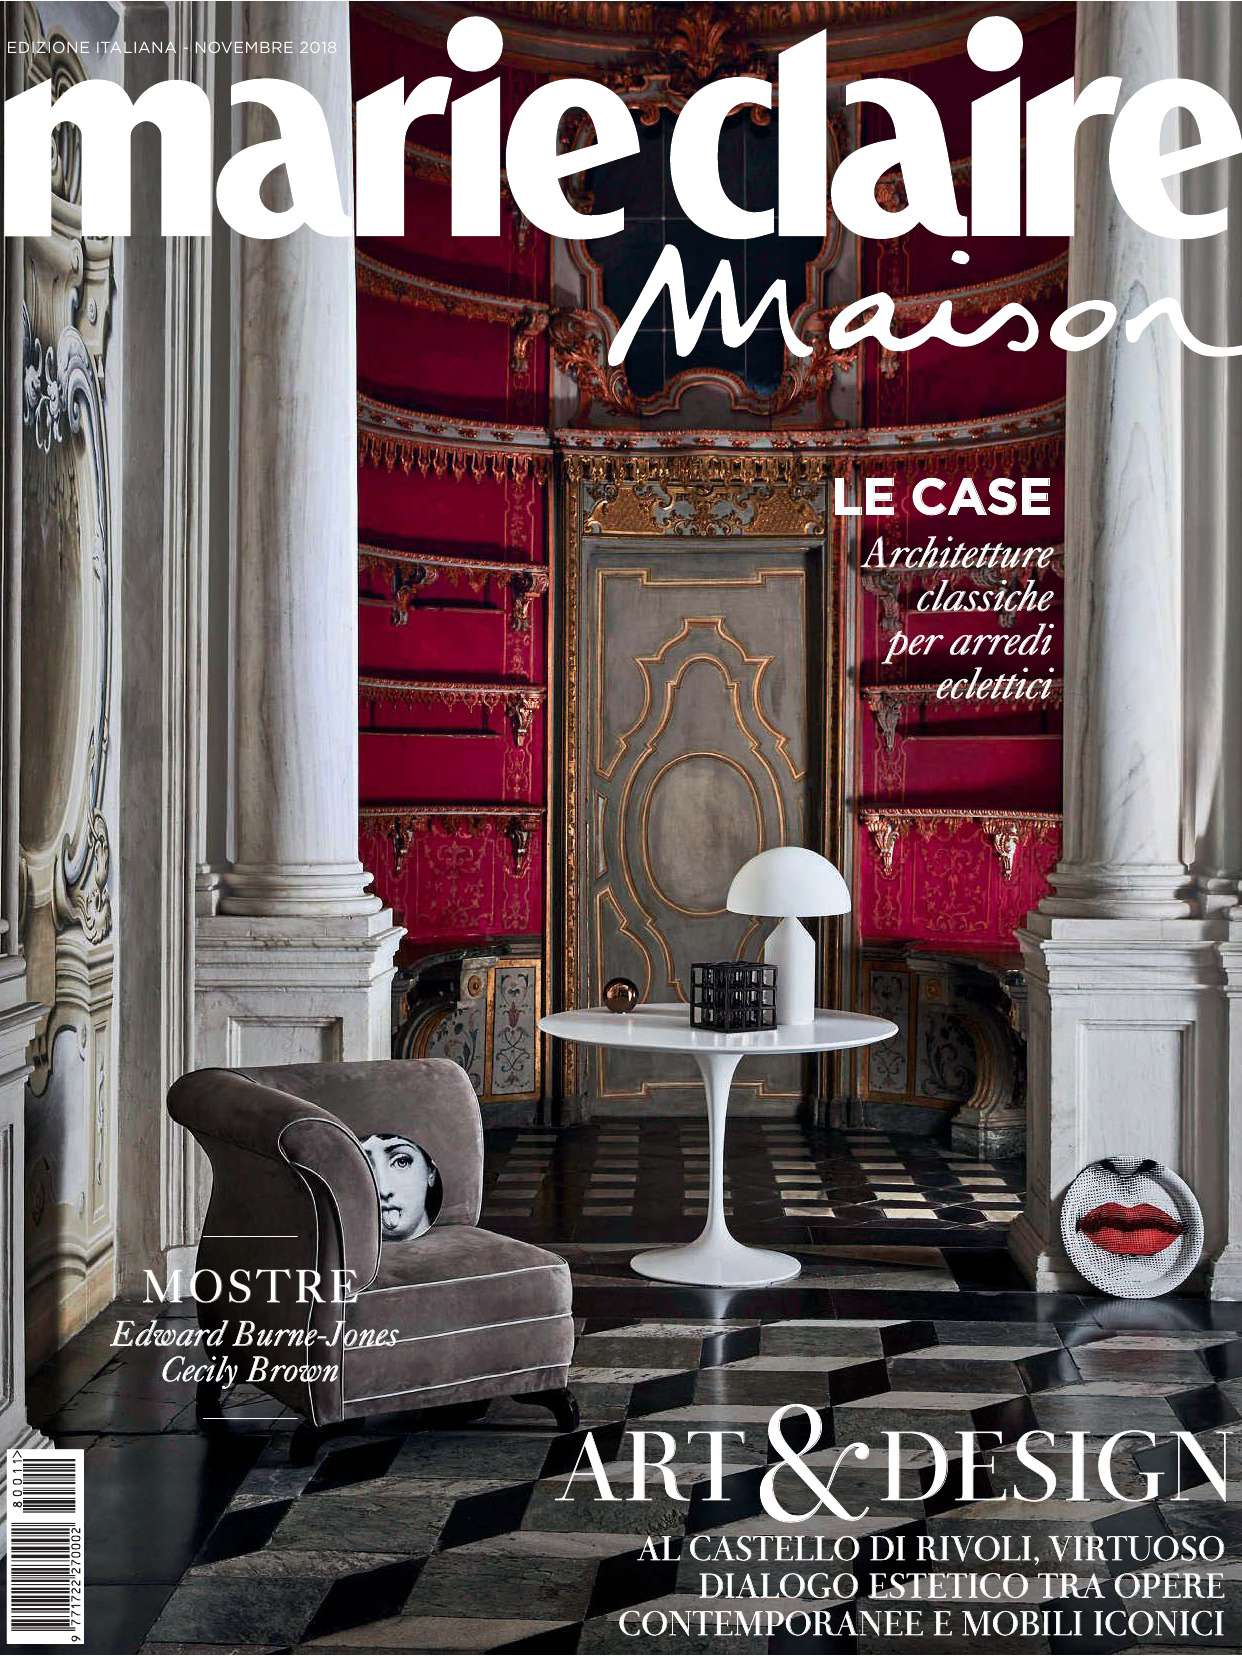 《Marie Claire maison》意大利版时尚室内设计杂志2018年11月号